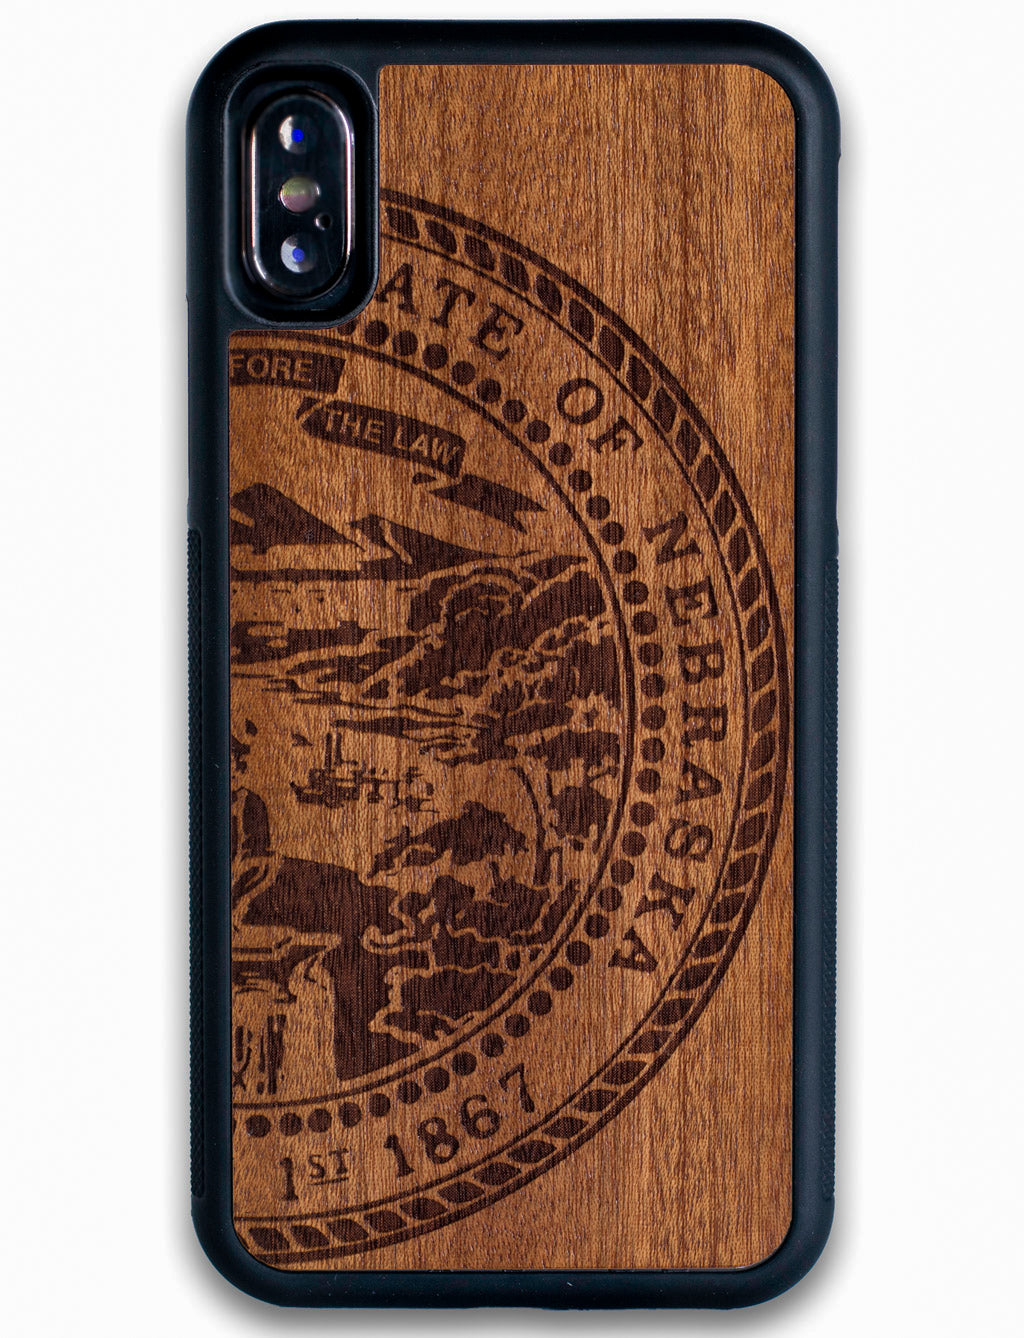 Nebraska flag wooden iPhone X case